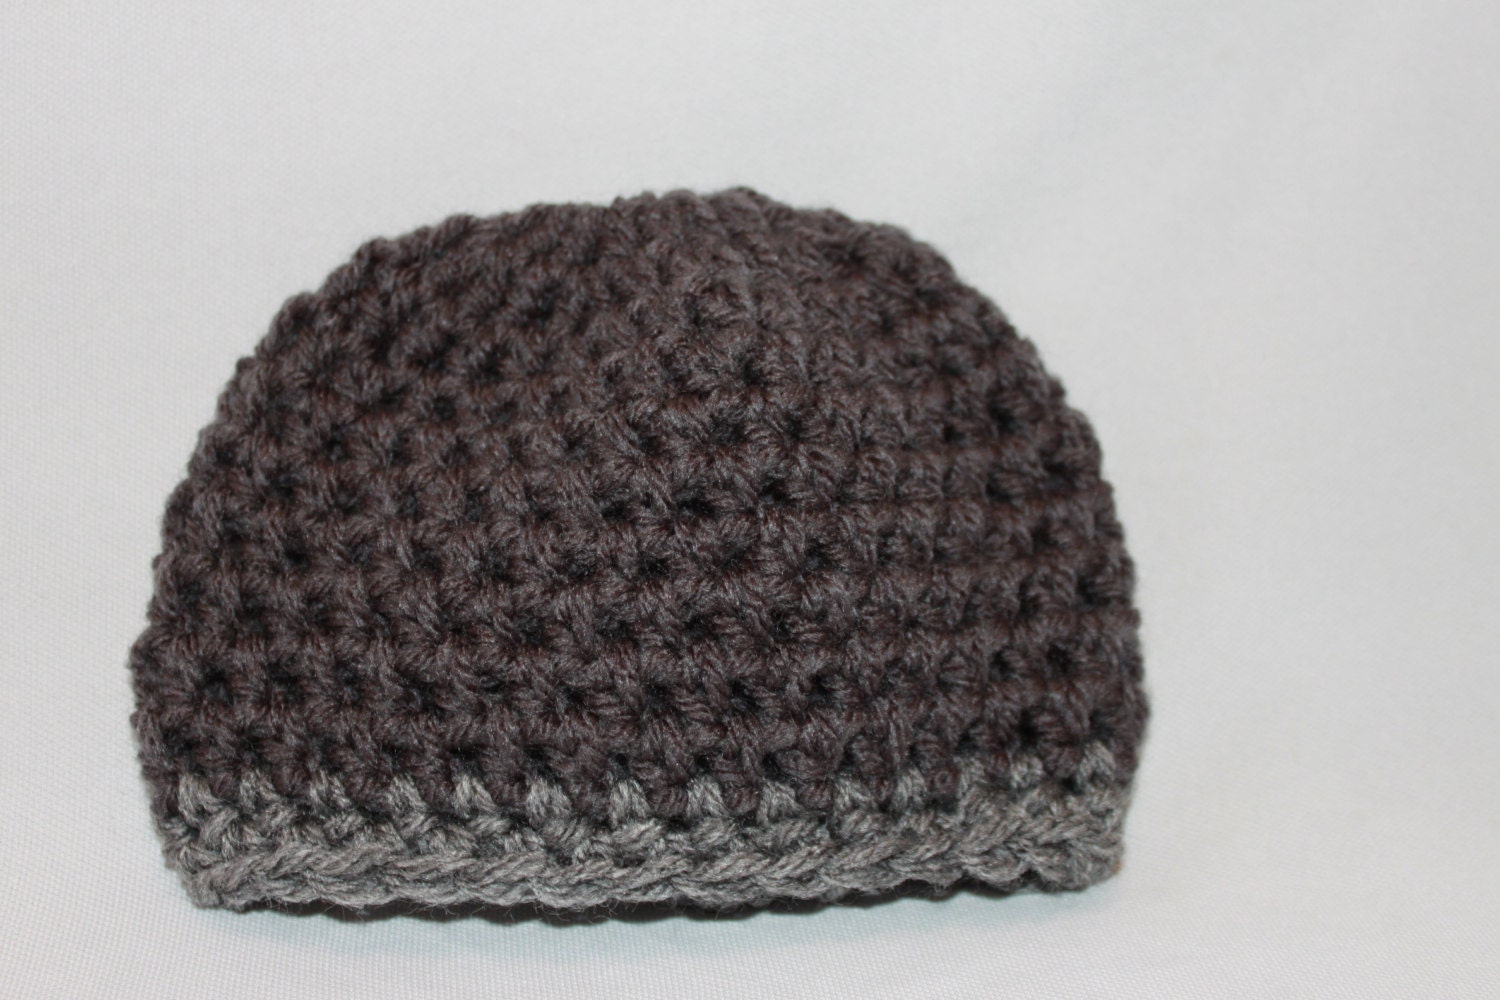 Newborn Hat - Baby Hat - Crochet Hat - Gray Baby Hat- Striped Gray Hat - Infant Hat - Crocheted Boys Hat - MyStitchInTime